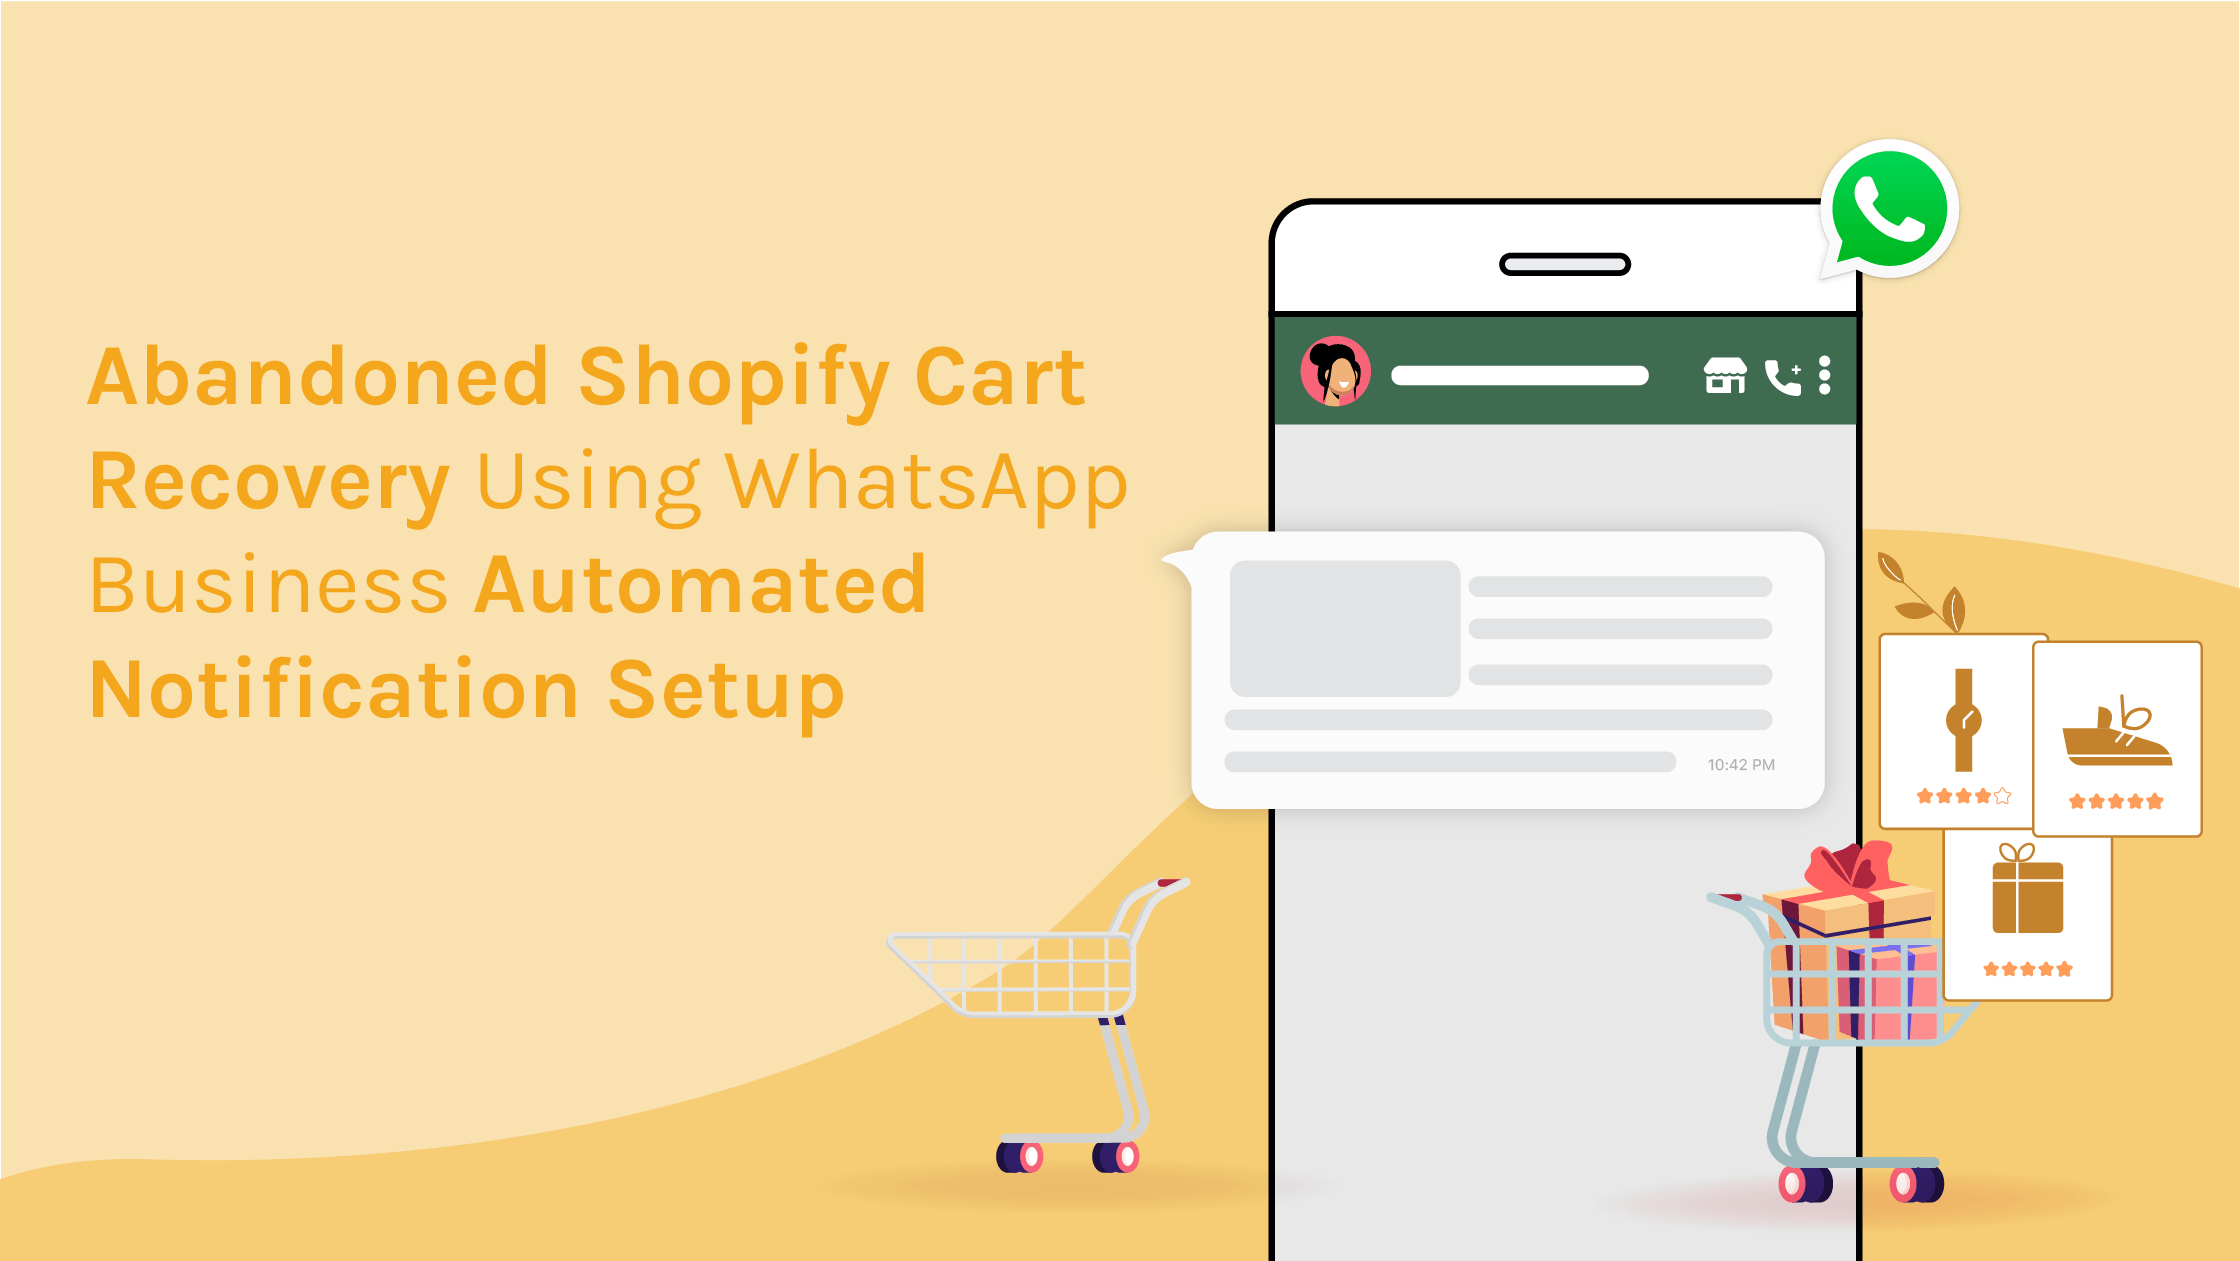 Abandoned Shopify Cart Recovery Using WhatsApp Business Automated Notification Setup